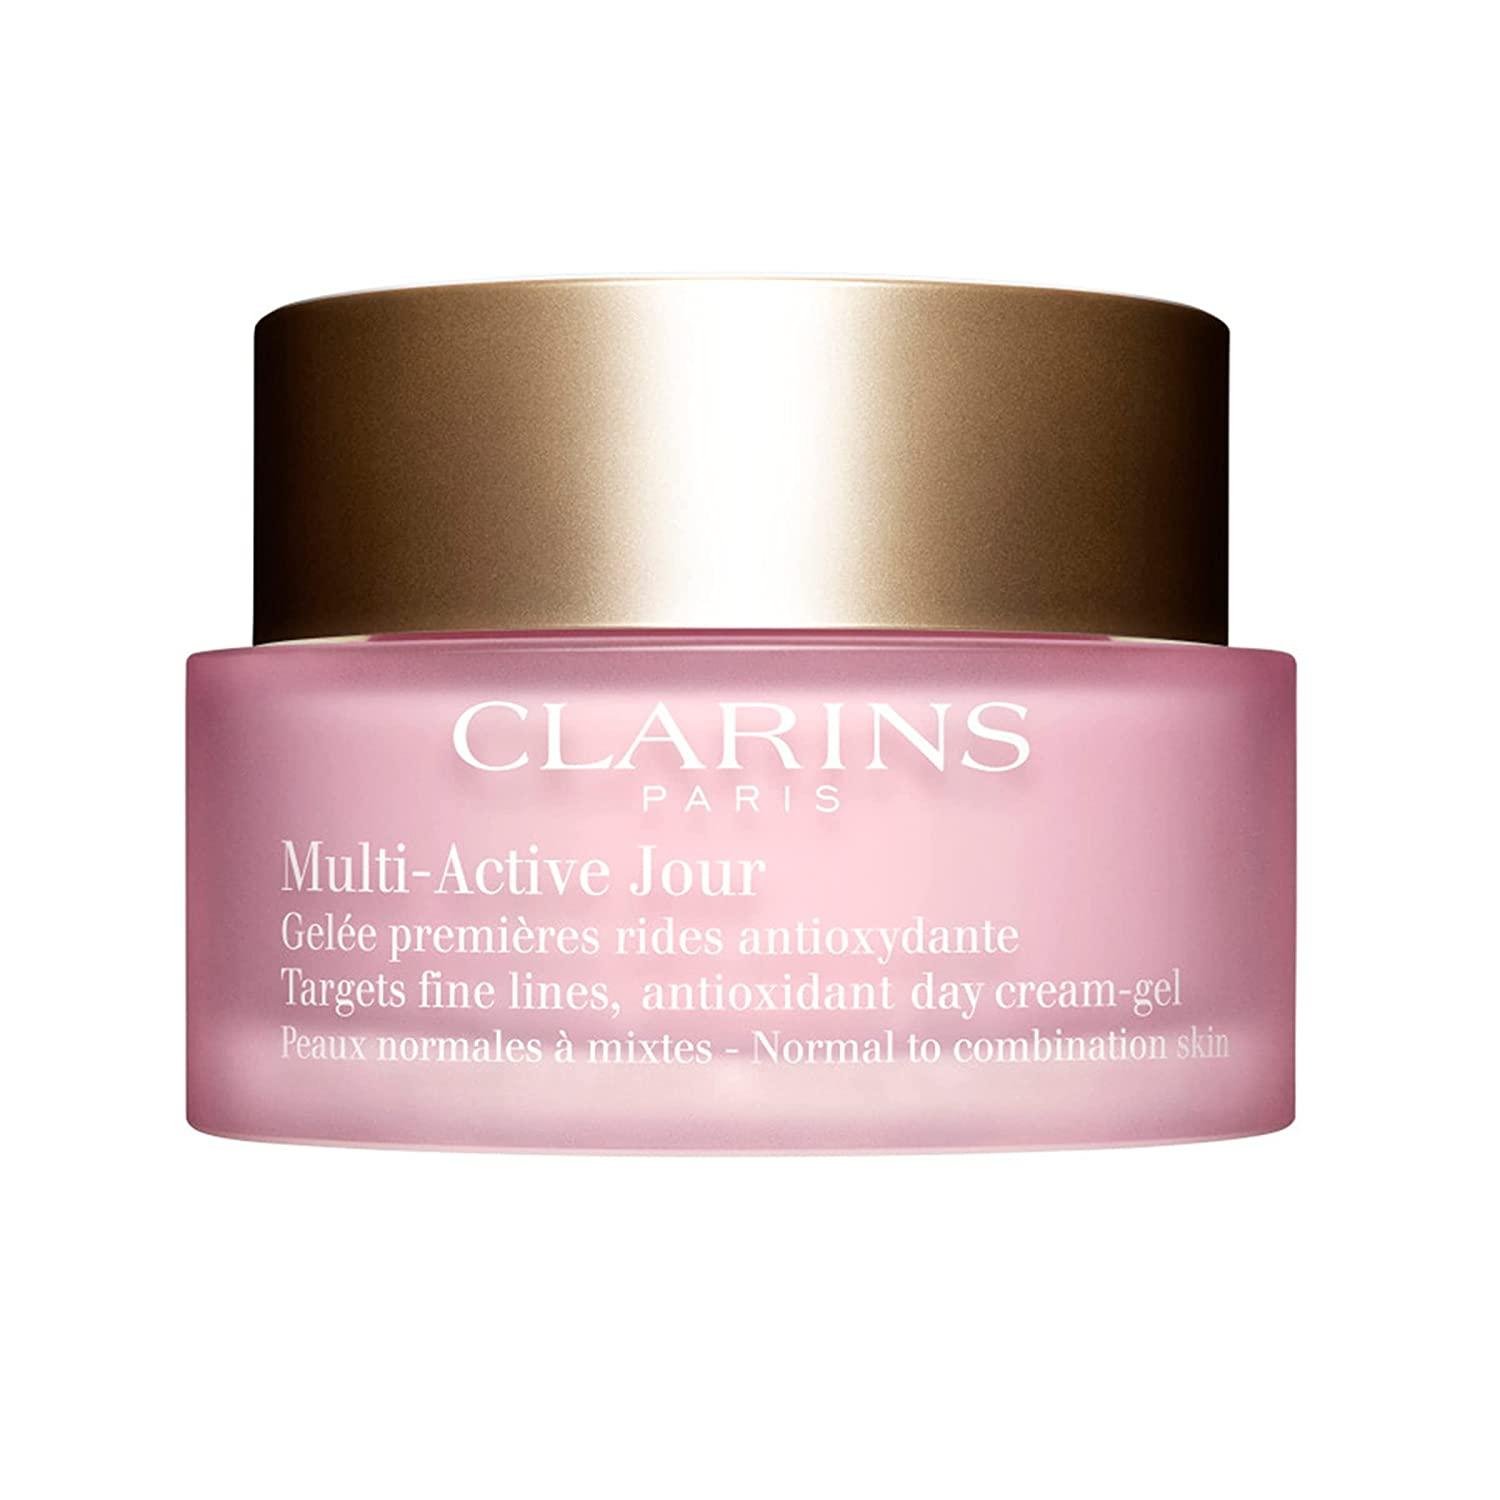 Clarins Multi-Active Day Cream-Gel | Multi-Tasking Moisturizer | Visibly Minimiz